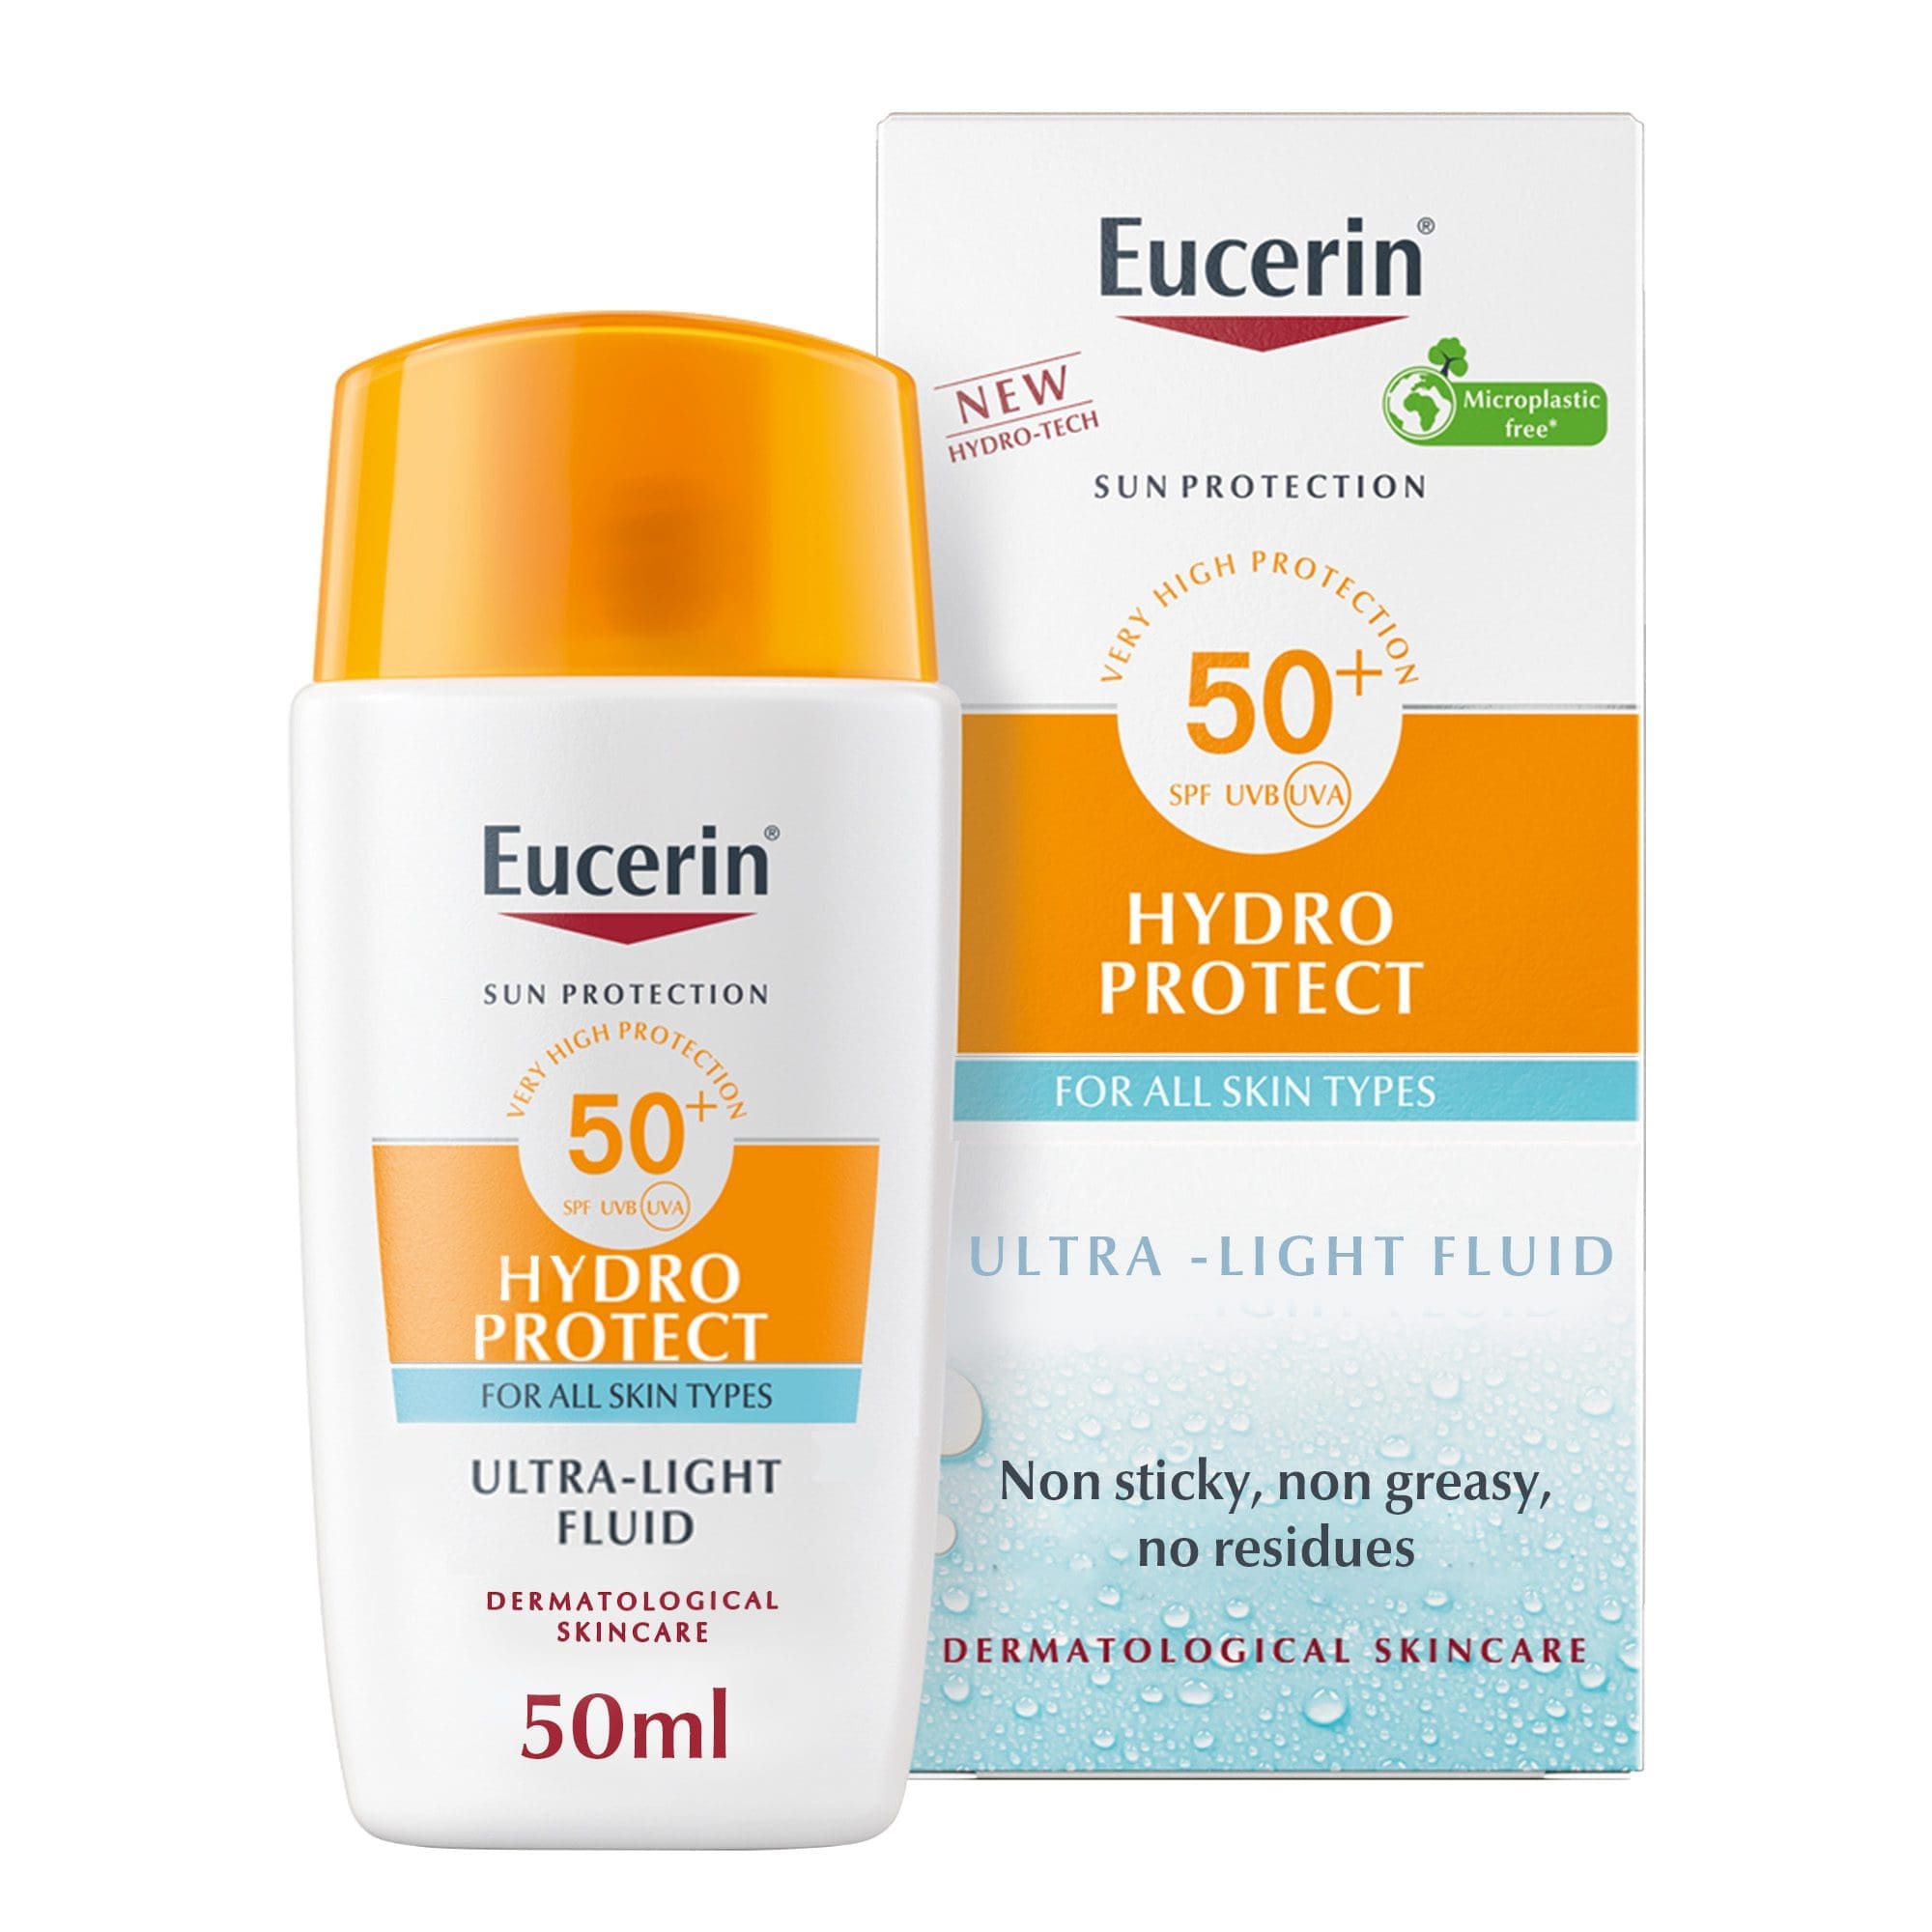 Eucerin Sunscreen Hydro Protect Face Ultra Light Fluid, 50ml